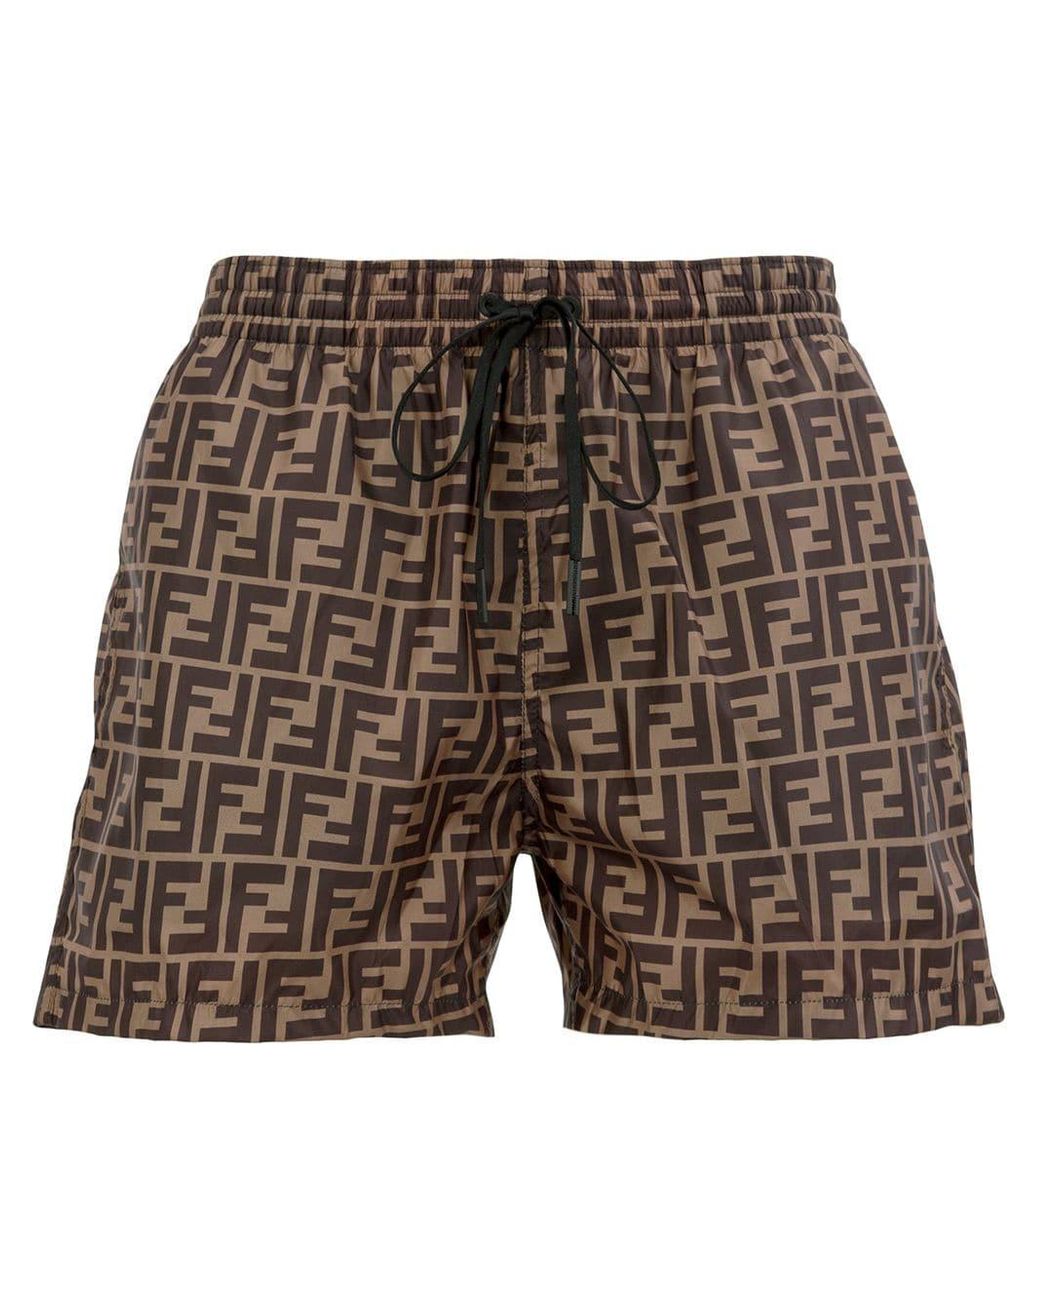 Fendi Synthetic Ff Logo Swim Shorts in Brown for Men - Lyst